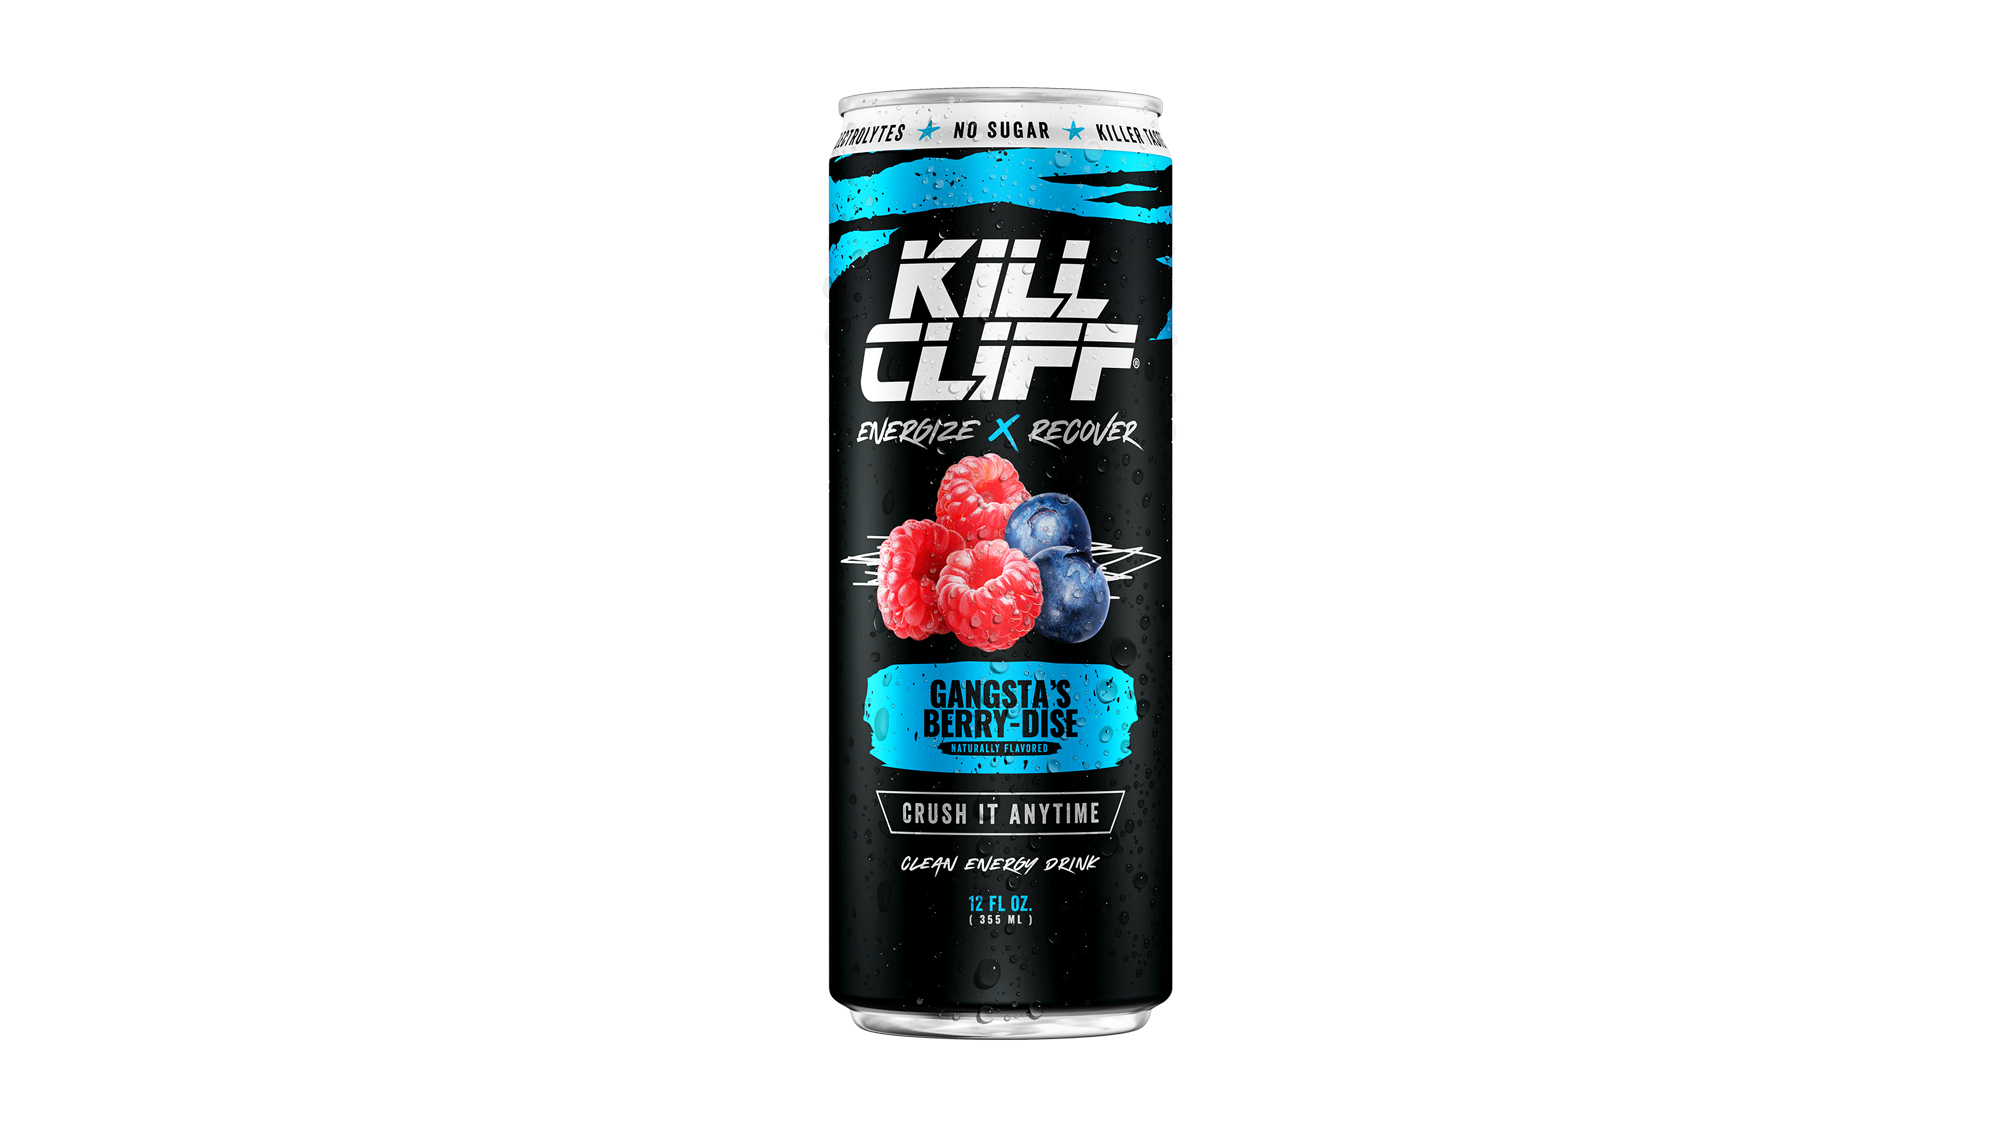 Kill Cliff - Gangsta's Berry Dise